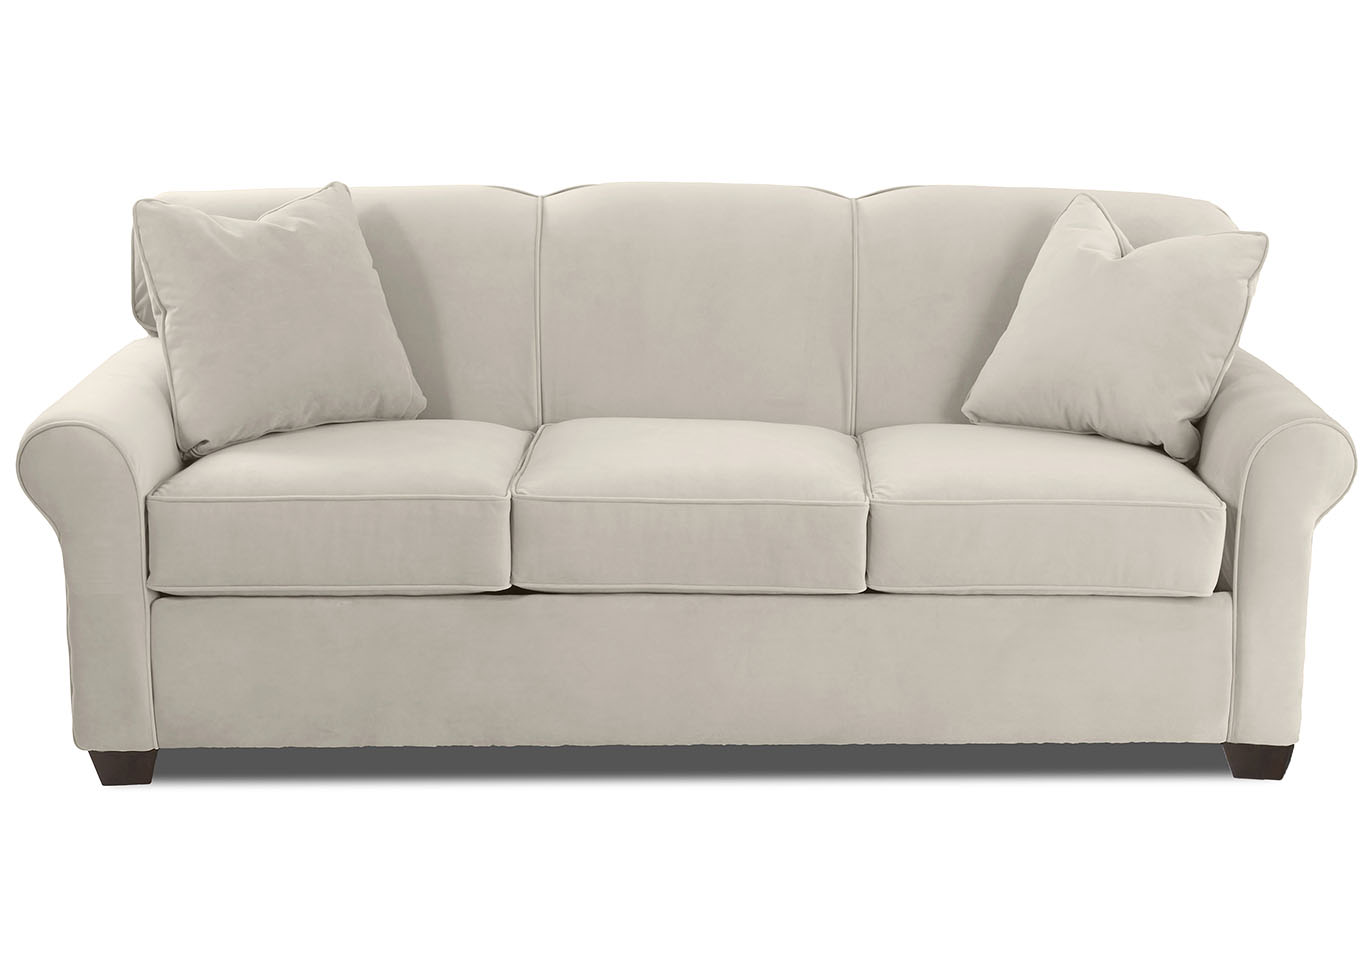 Mayhew Off-White Sleeper Fabric Sofa Buy Furniture and Mattress